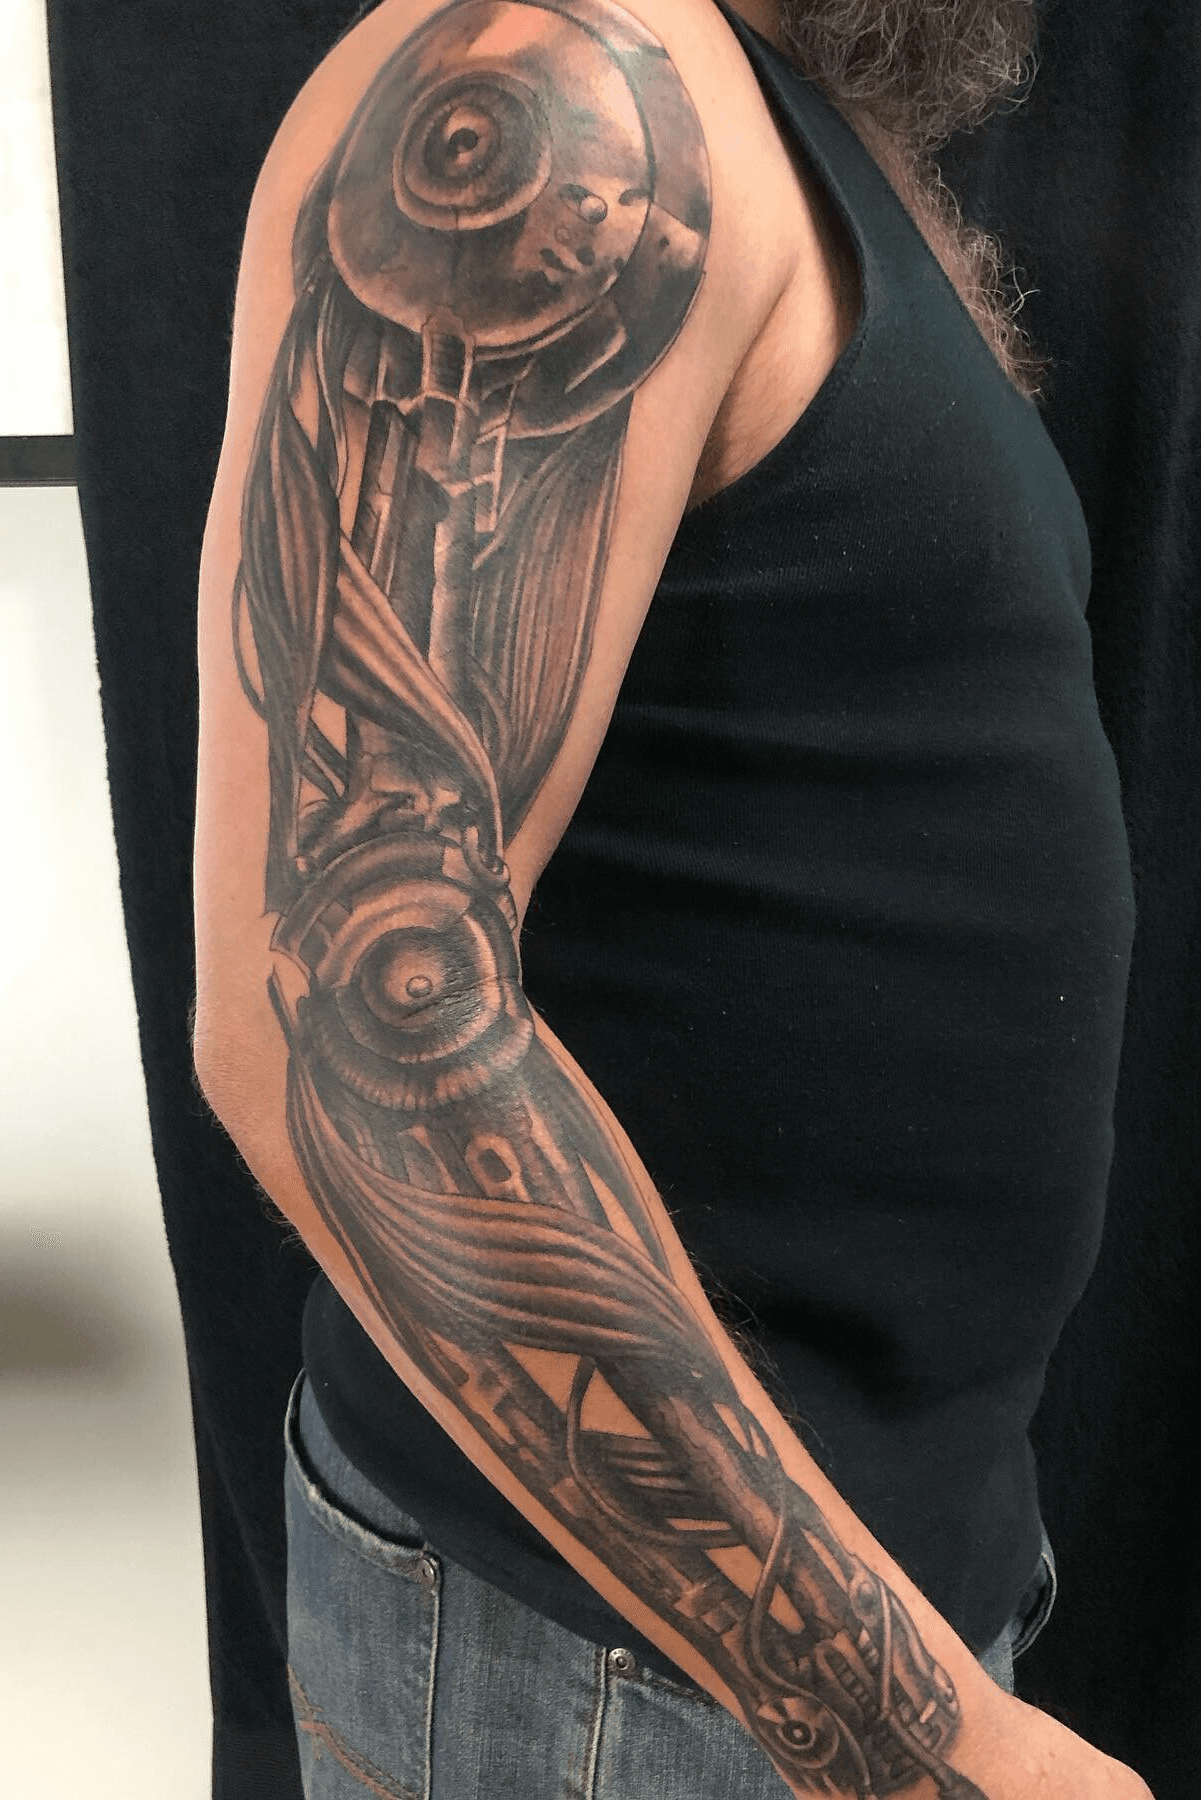 101 Amazing Robot Arm Tattoo Ideas That Will Blow Your Mind   Biomechanical tattoo Mechanical arm tattoo Cyborg tattoo